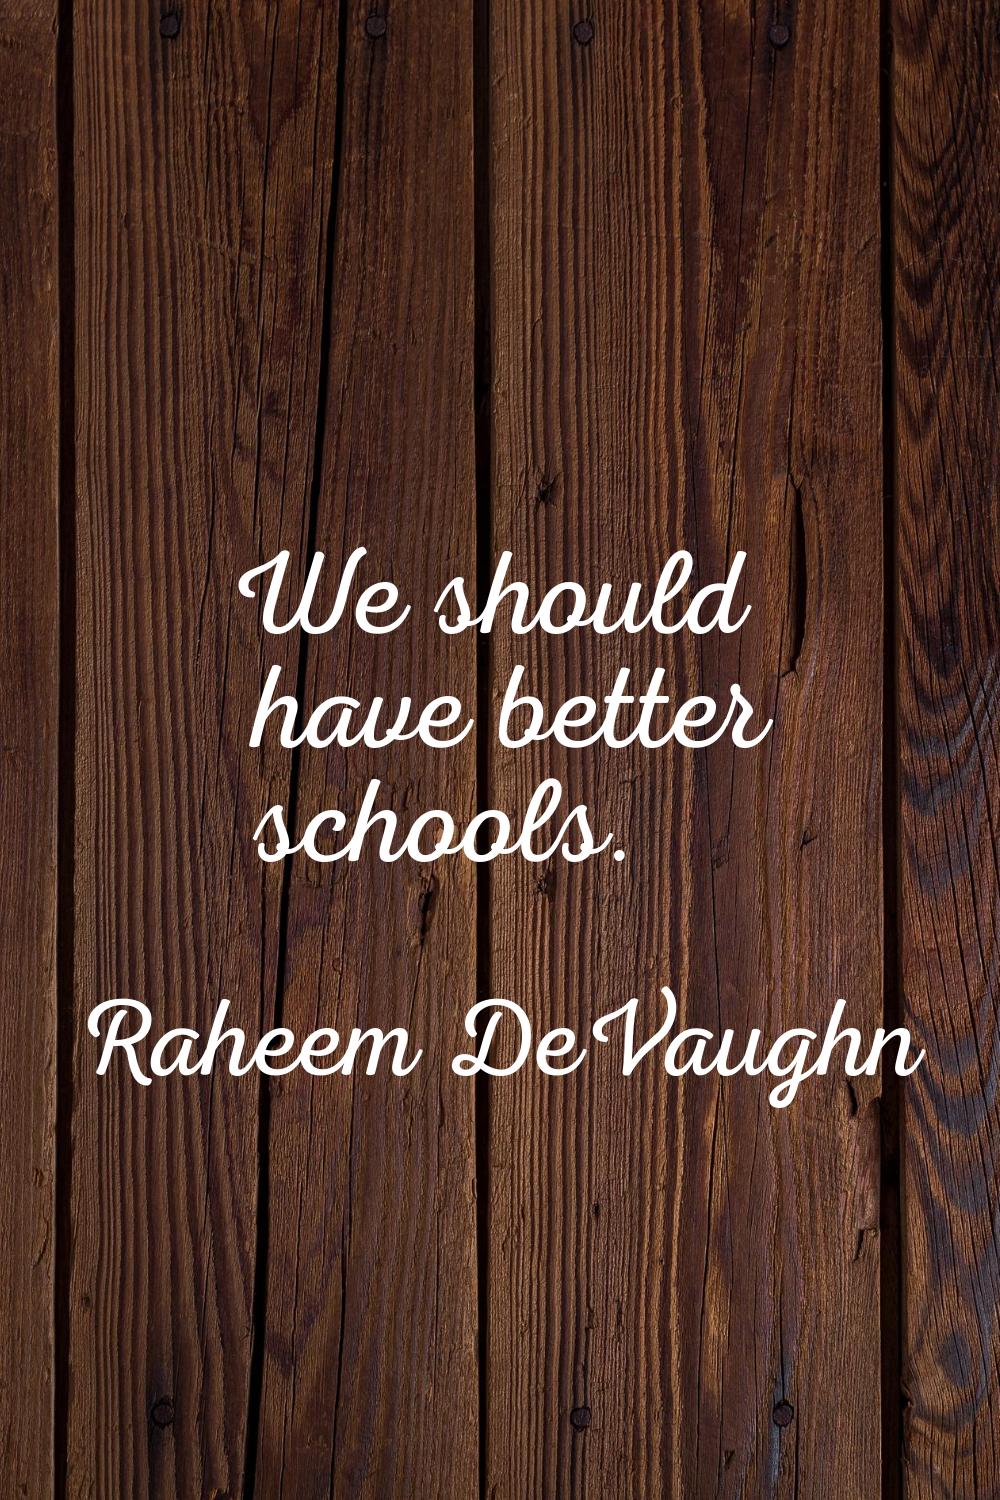 We should have better schools.